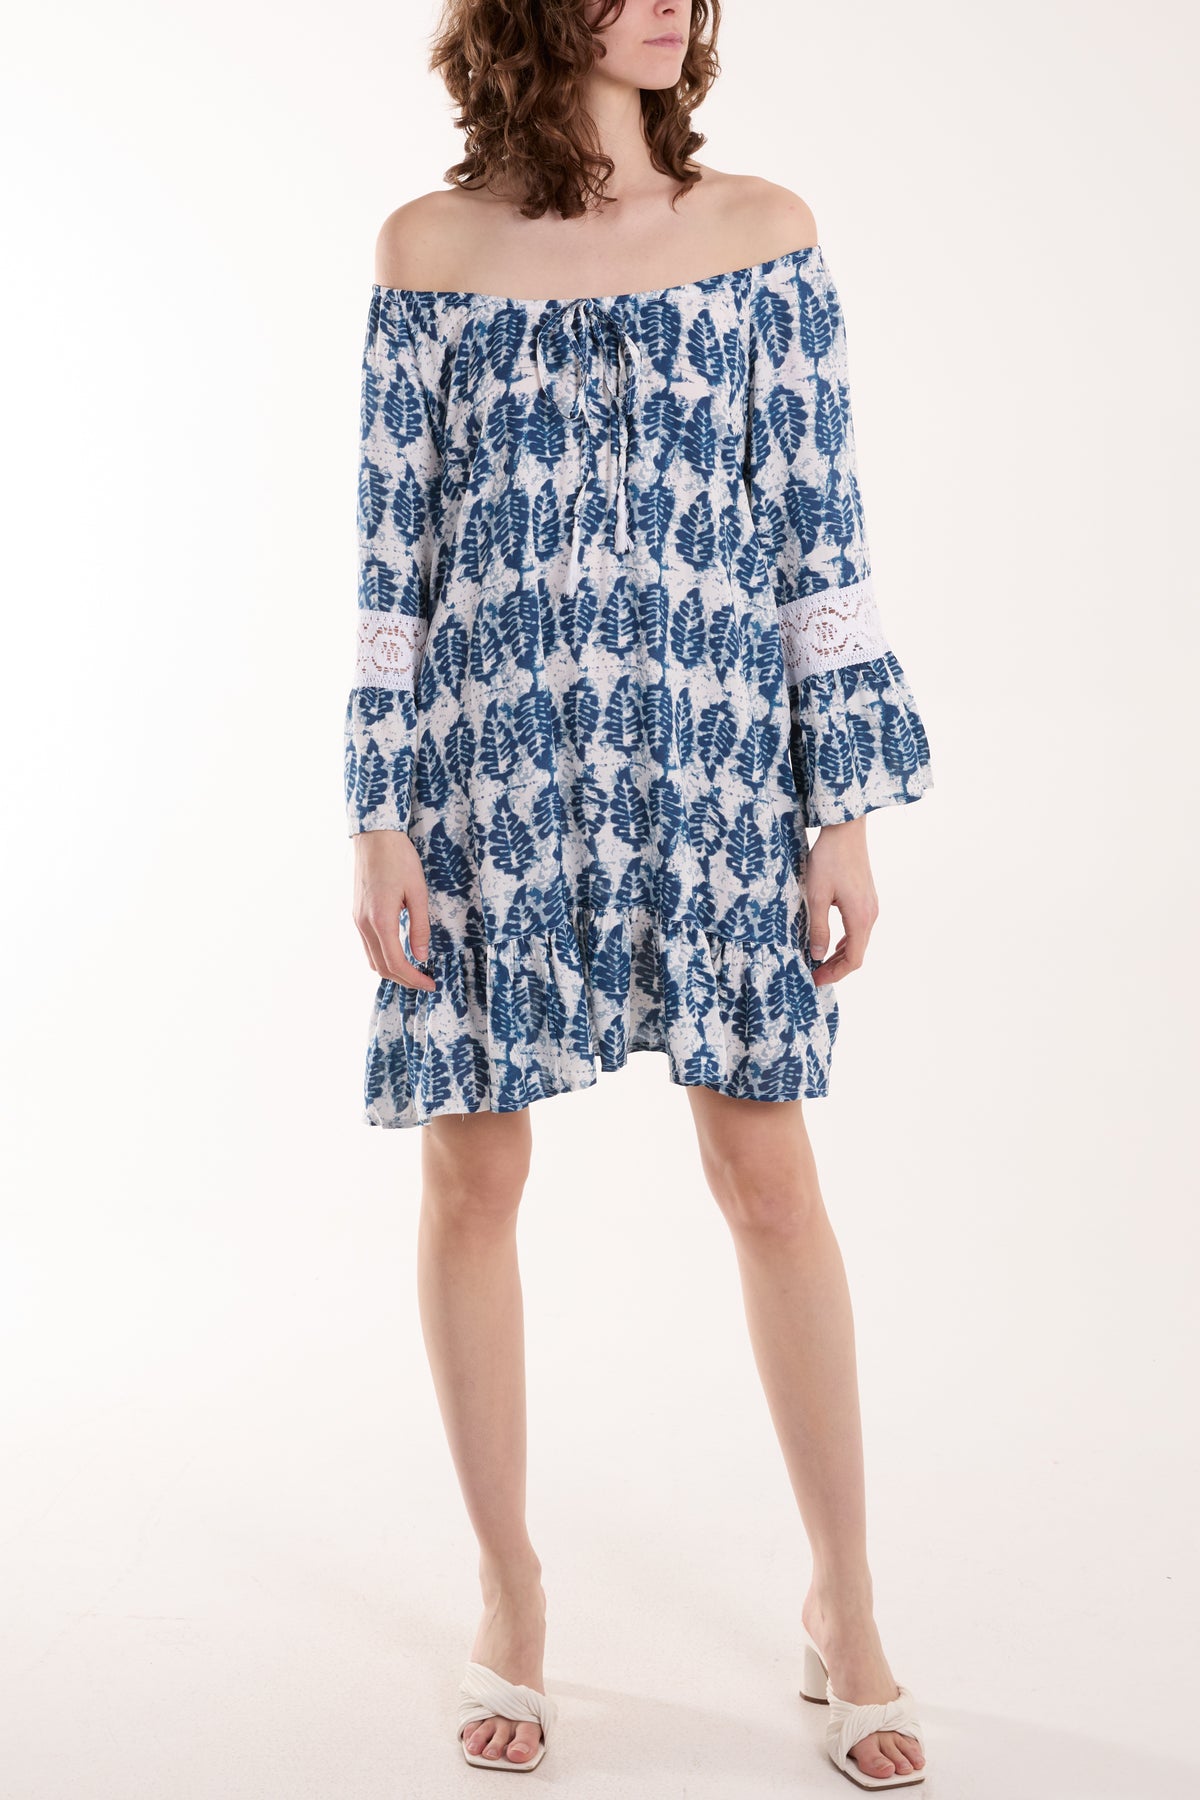 Bardot Leaf Print & Lace Detail Tunic Dress